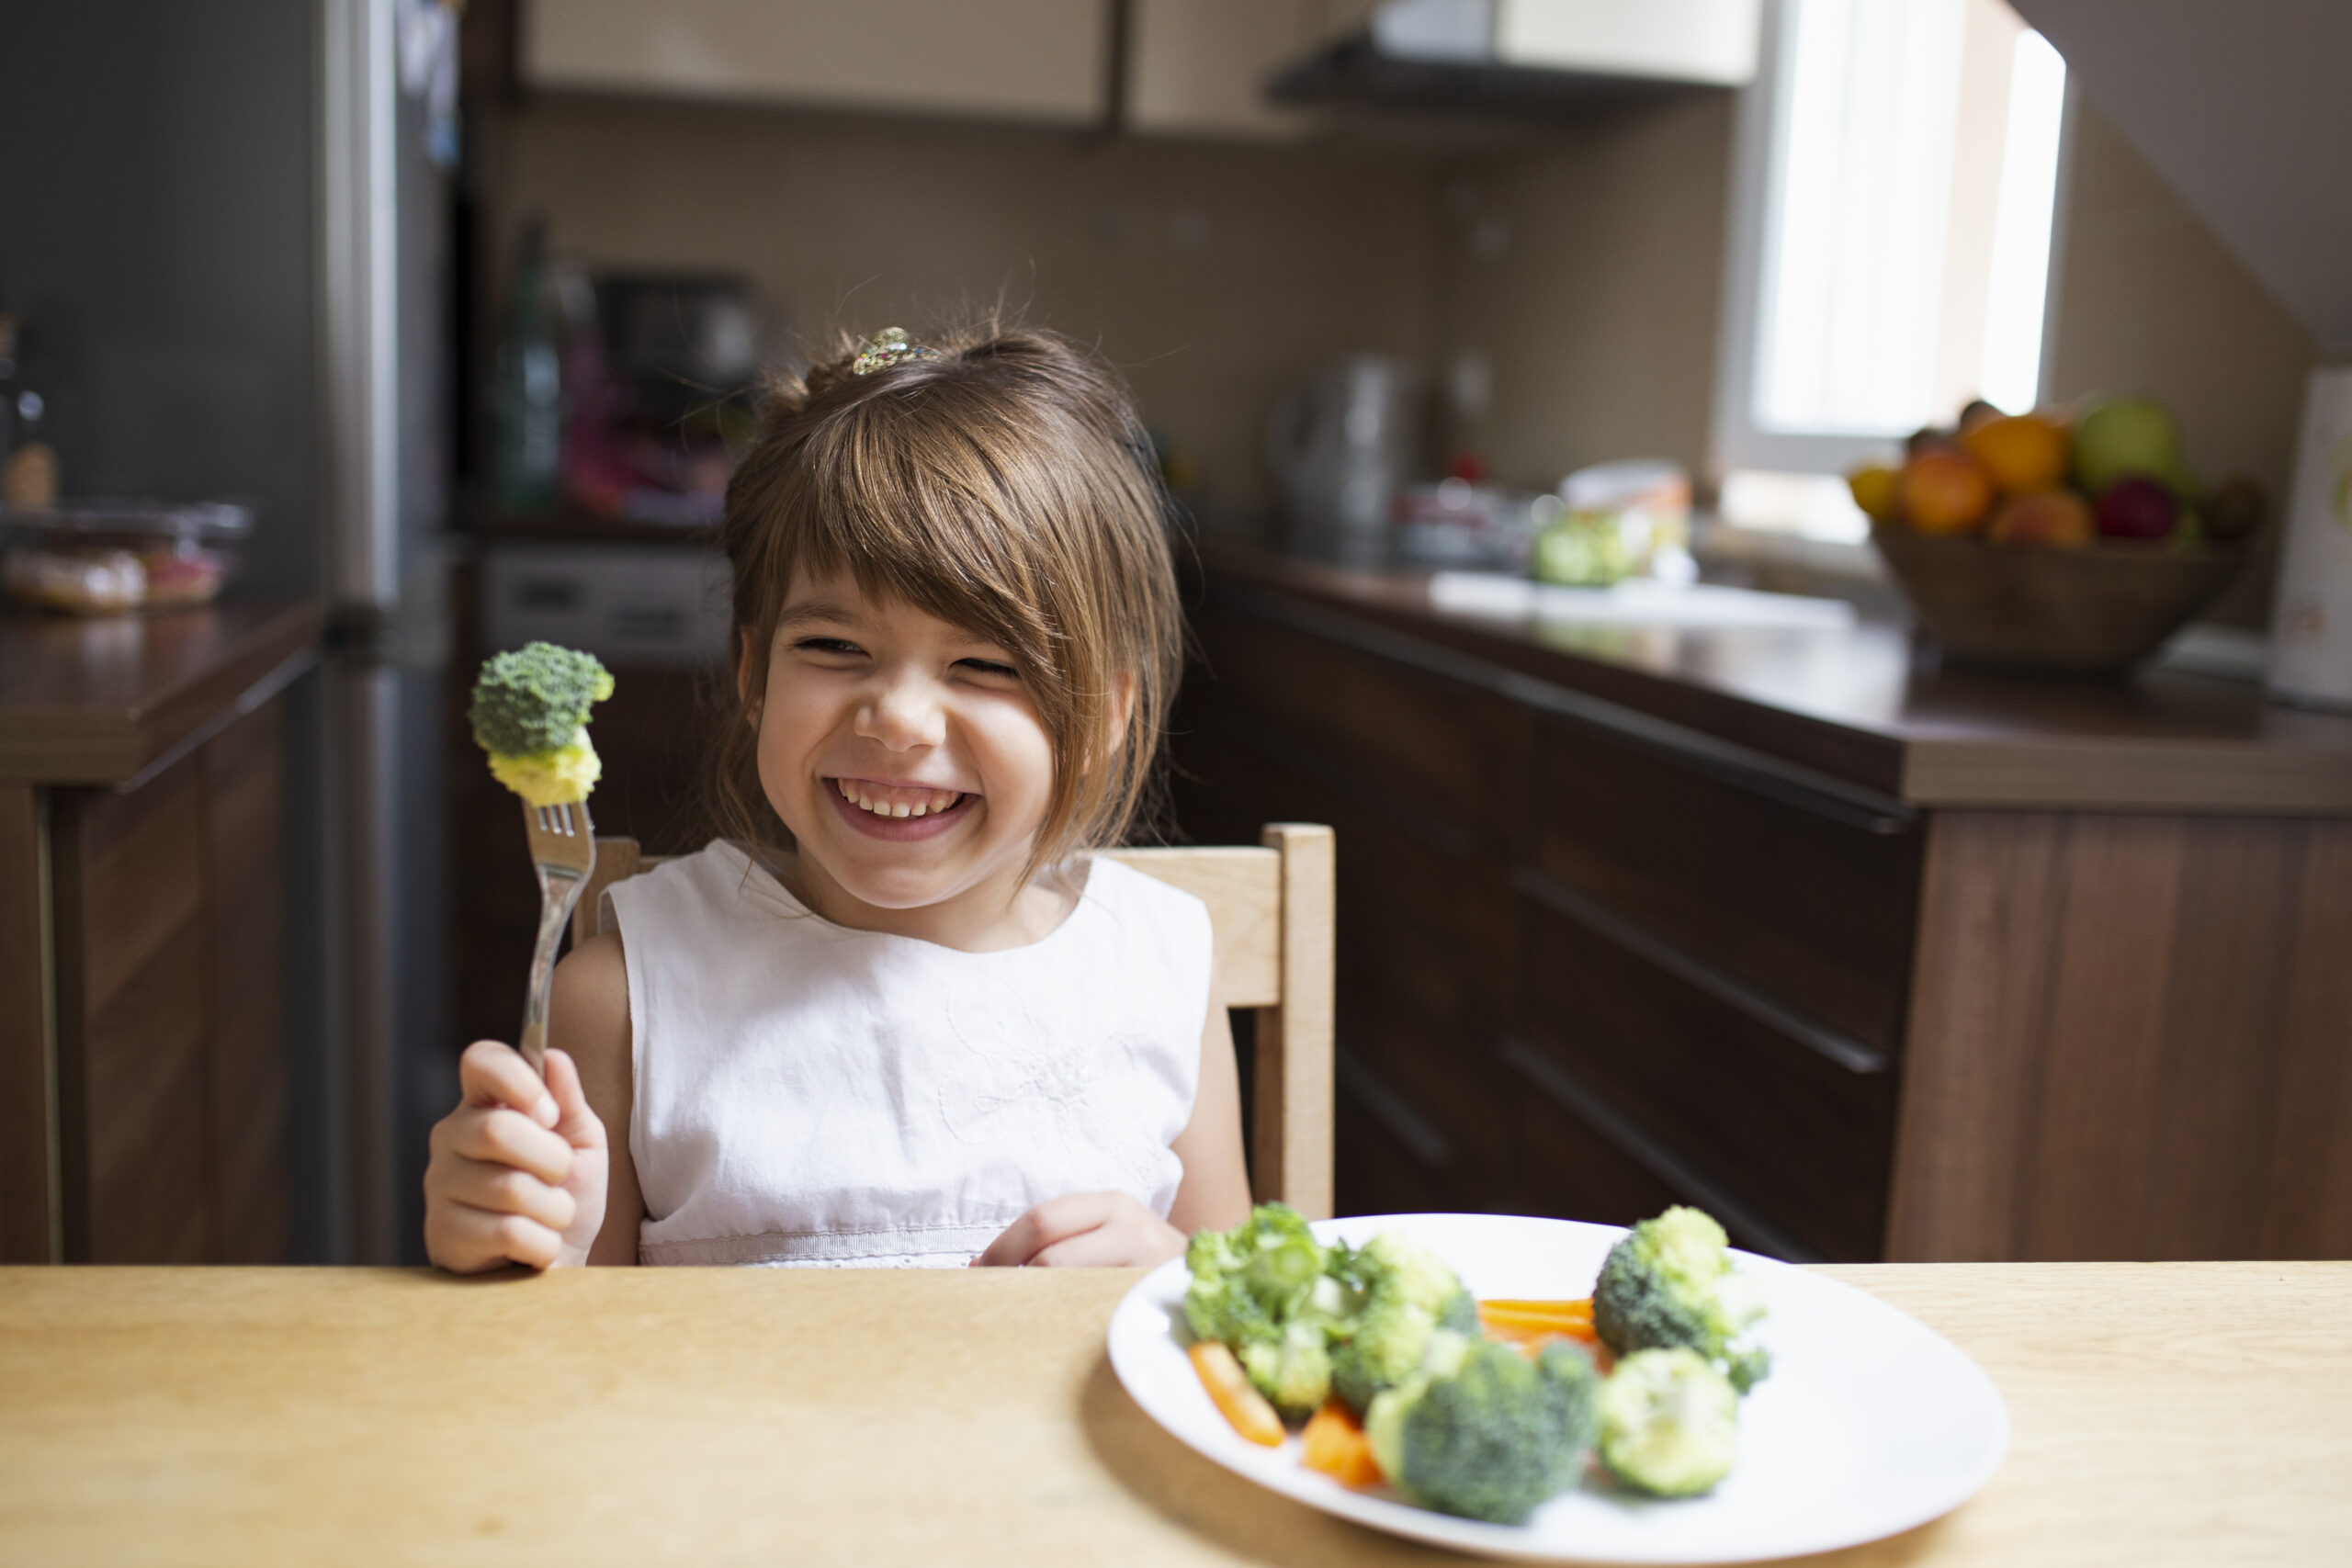 Kind mit Broccoli